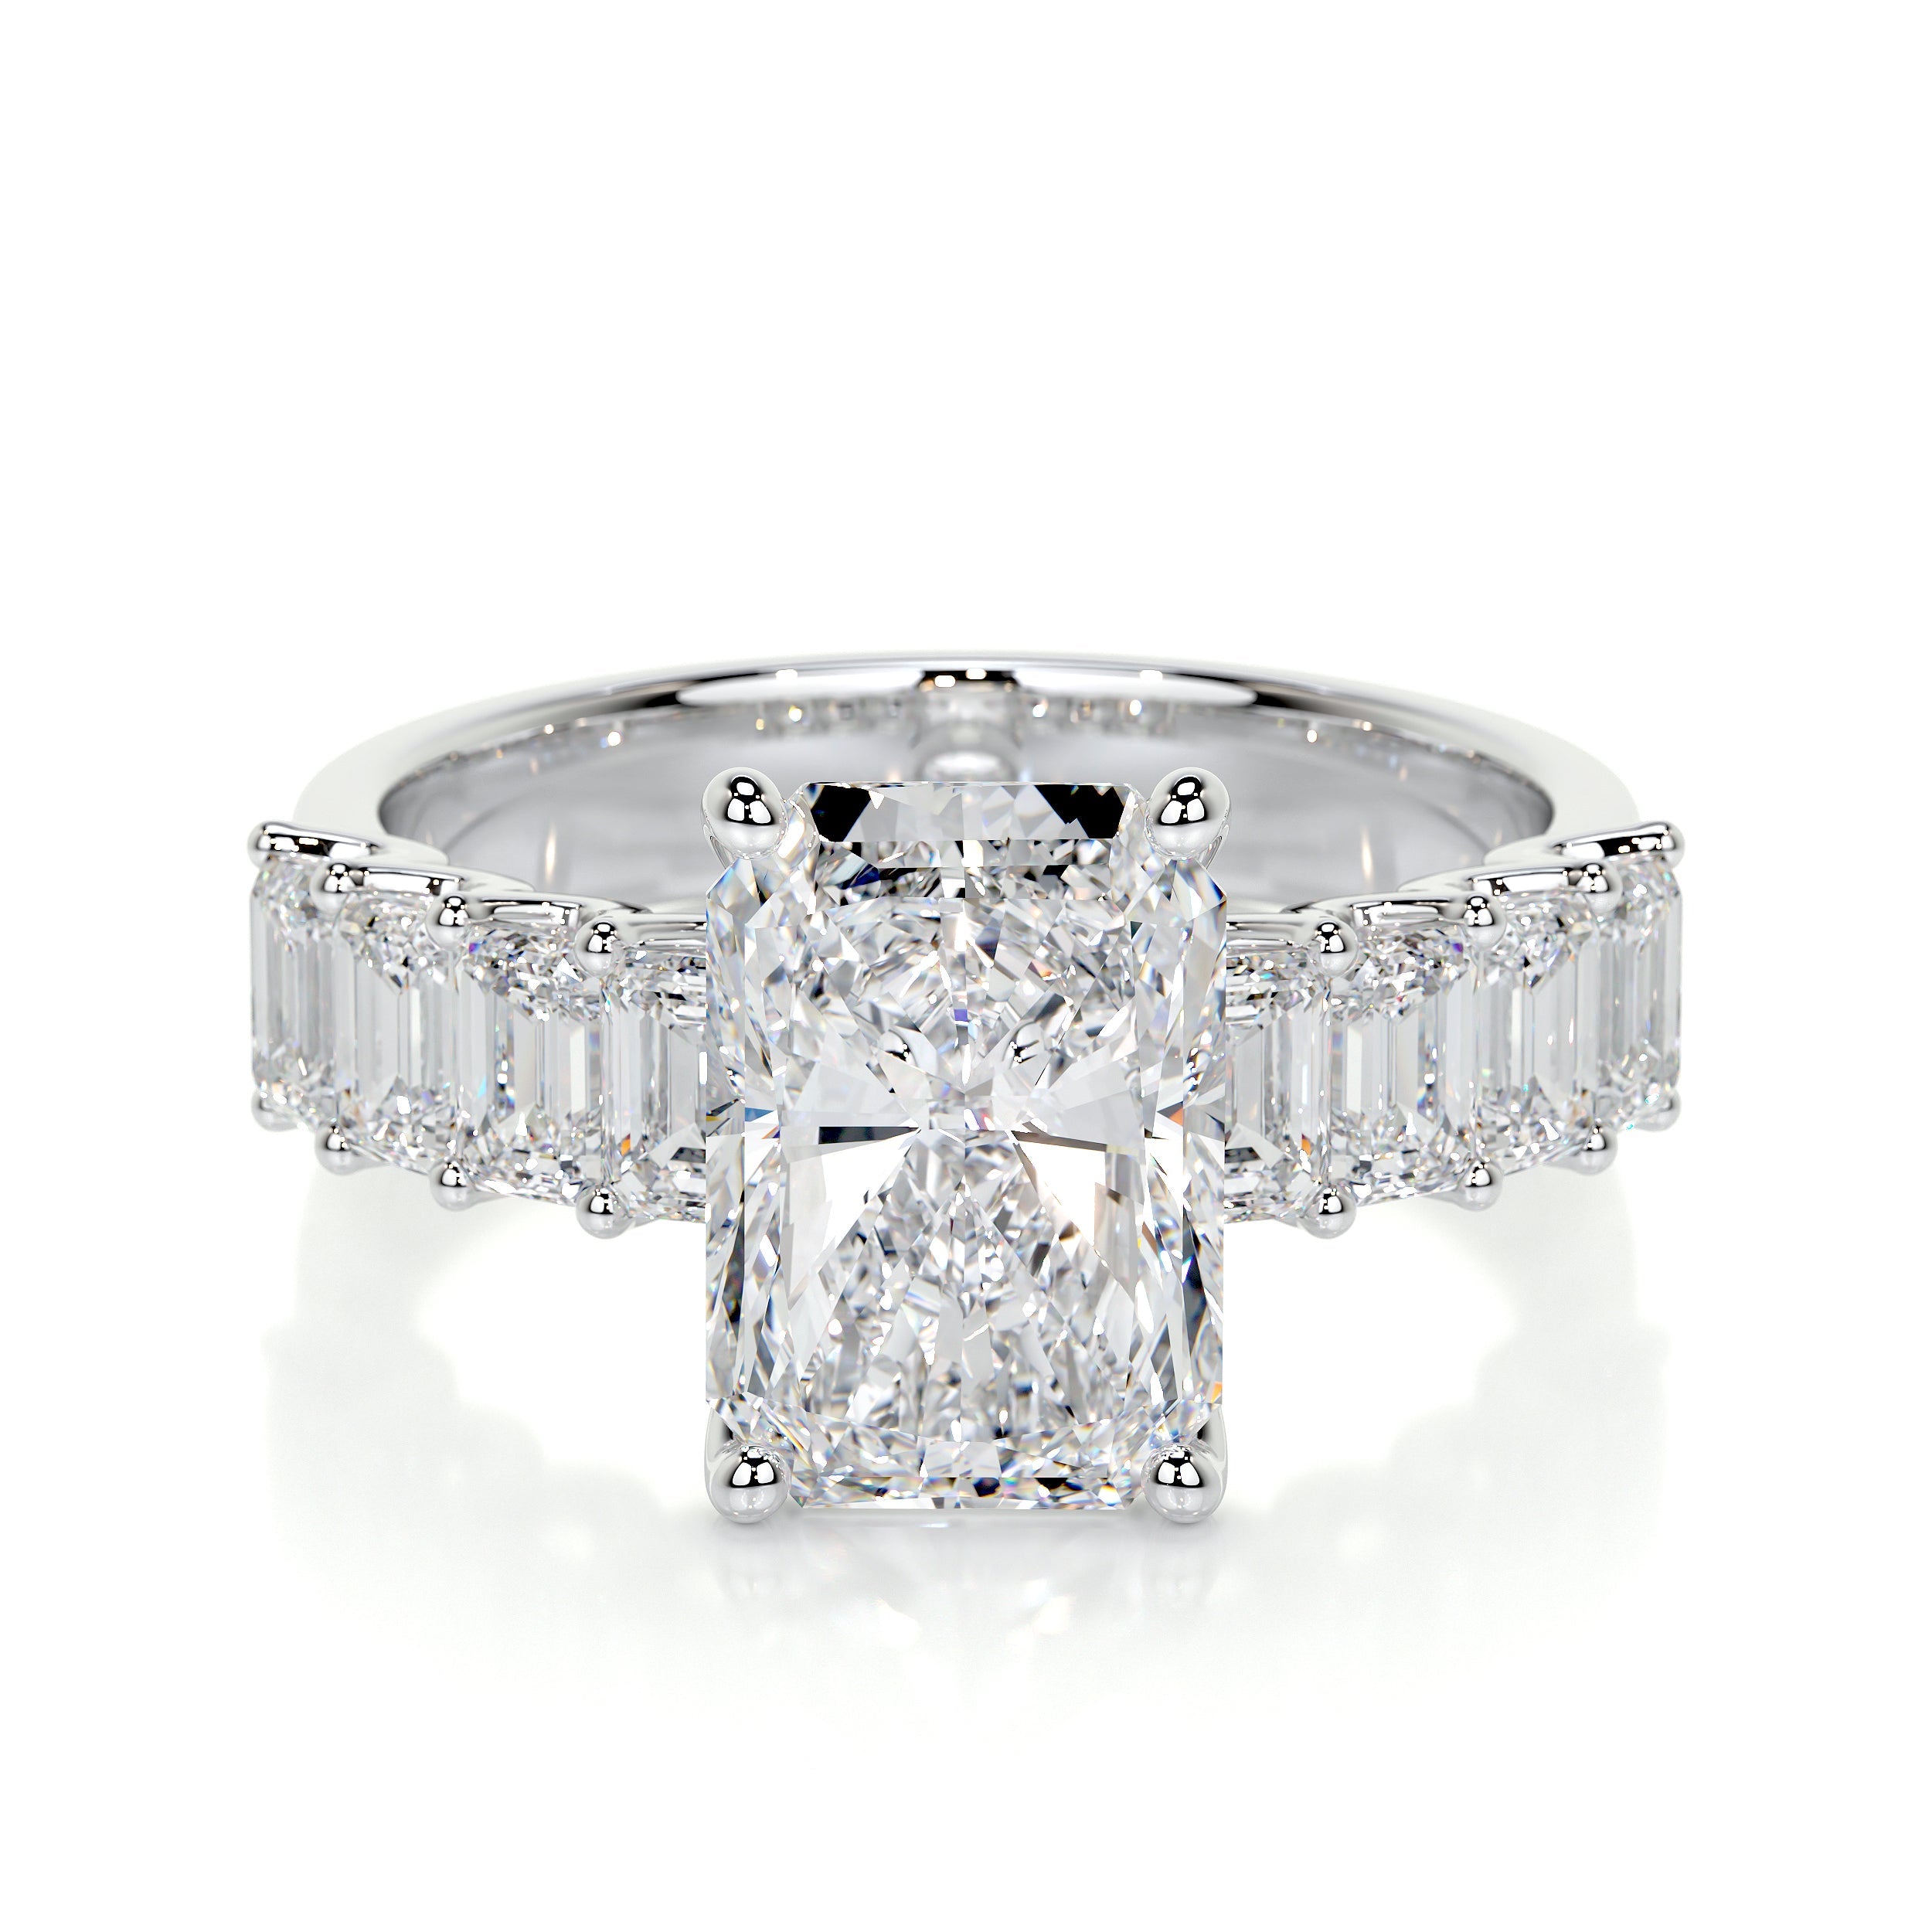 5 carat Emerald & Diamond Ring on 14K White Gold | Marctarian